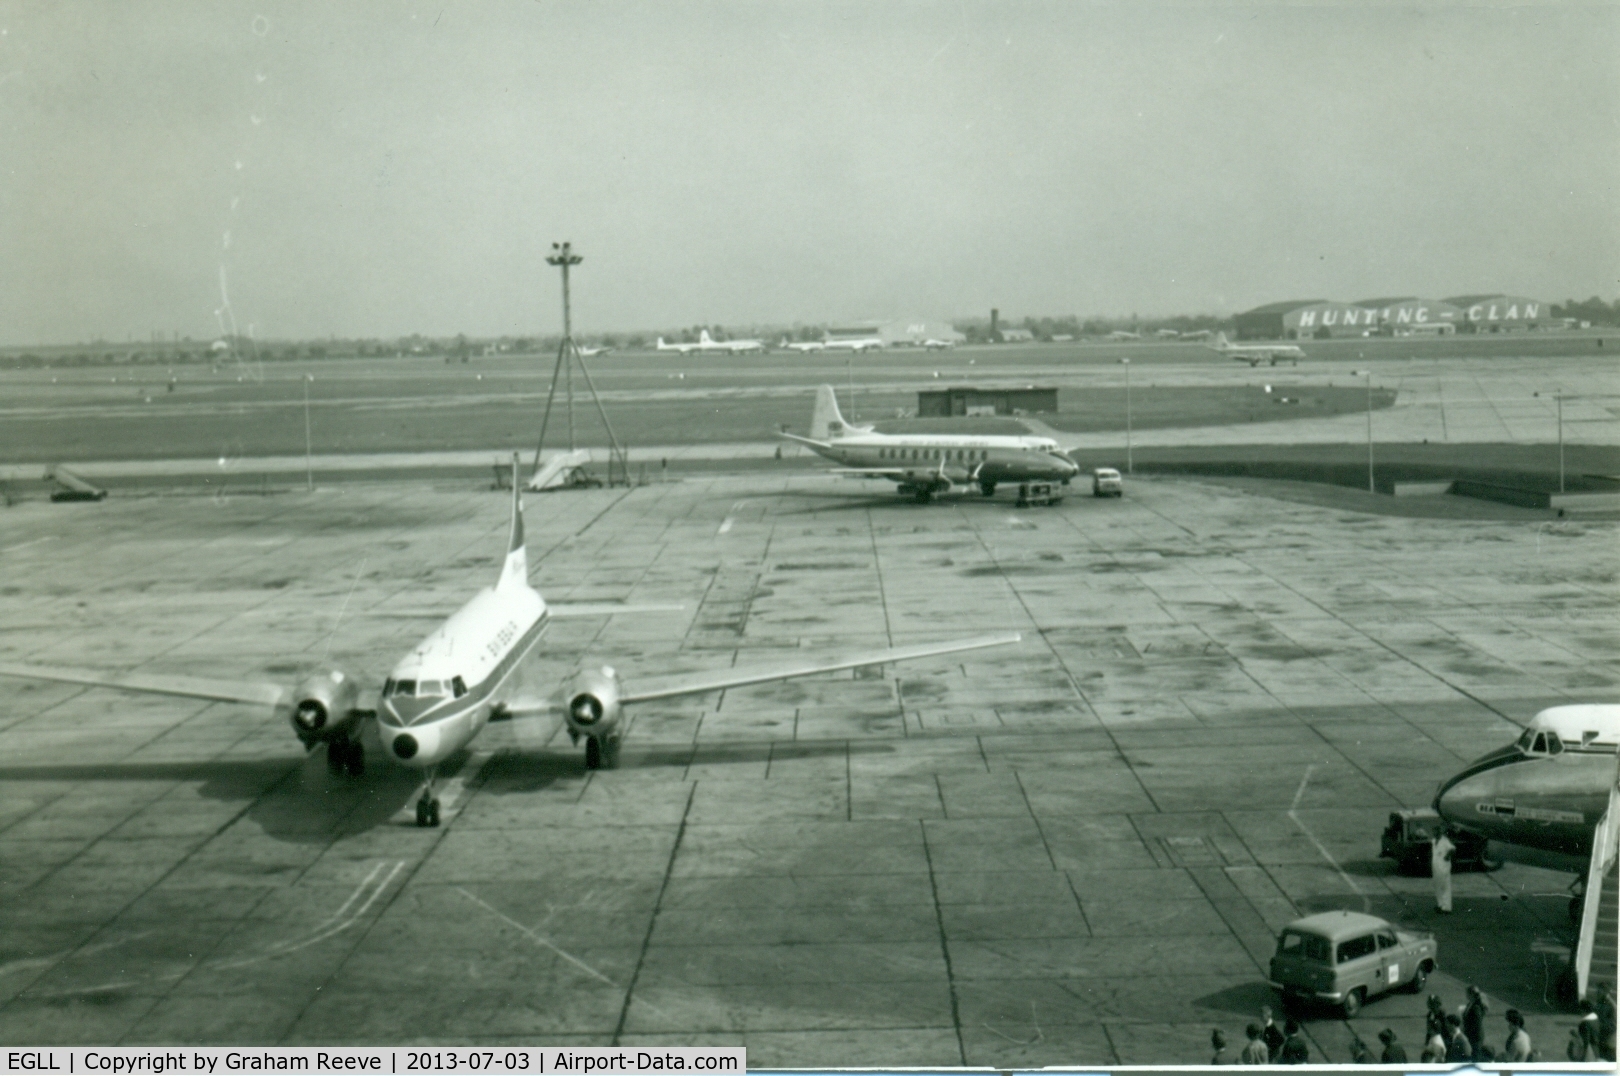 London Heathrow Airport, London, England United Kingdom (EGLL) - Heathrow in the 1950's